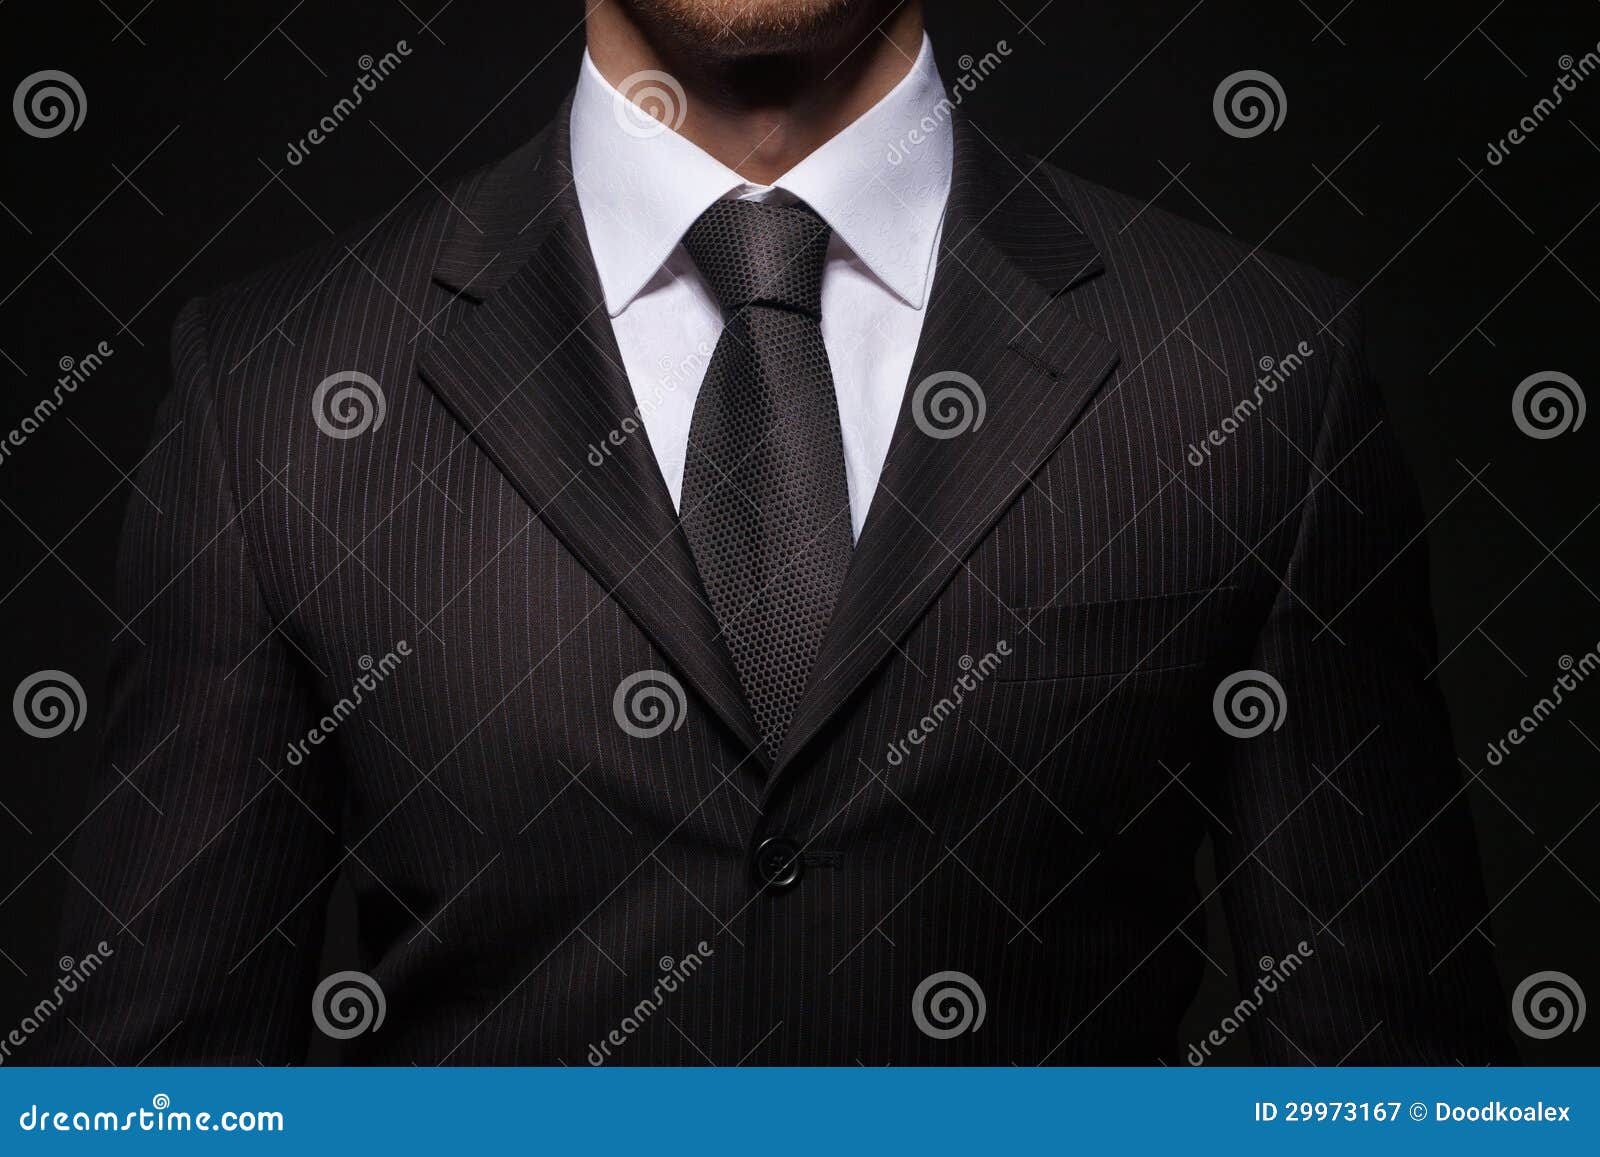 Businessman Standing on Dark Background Stock Image - Image of adult ...